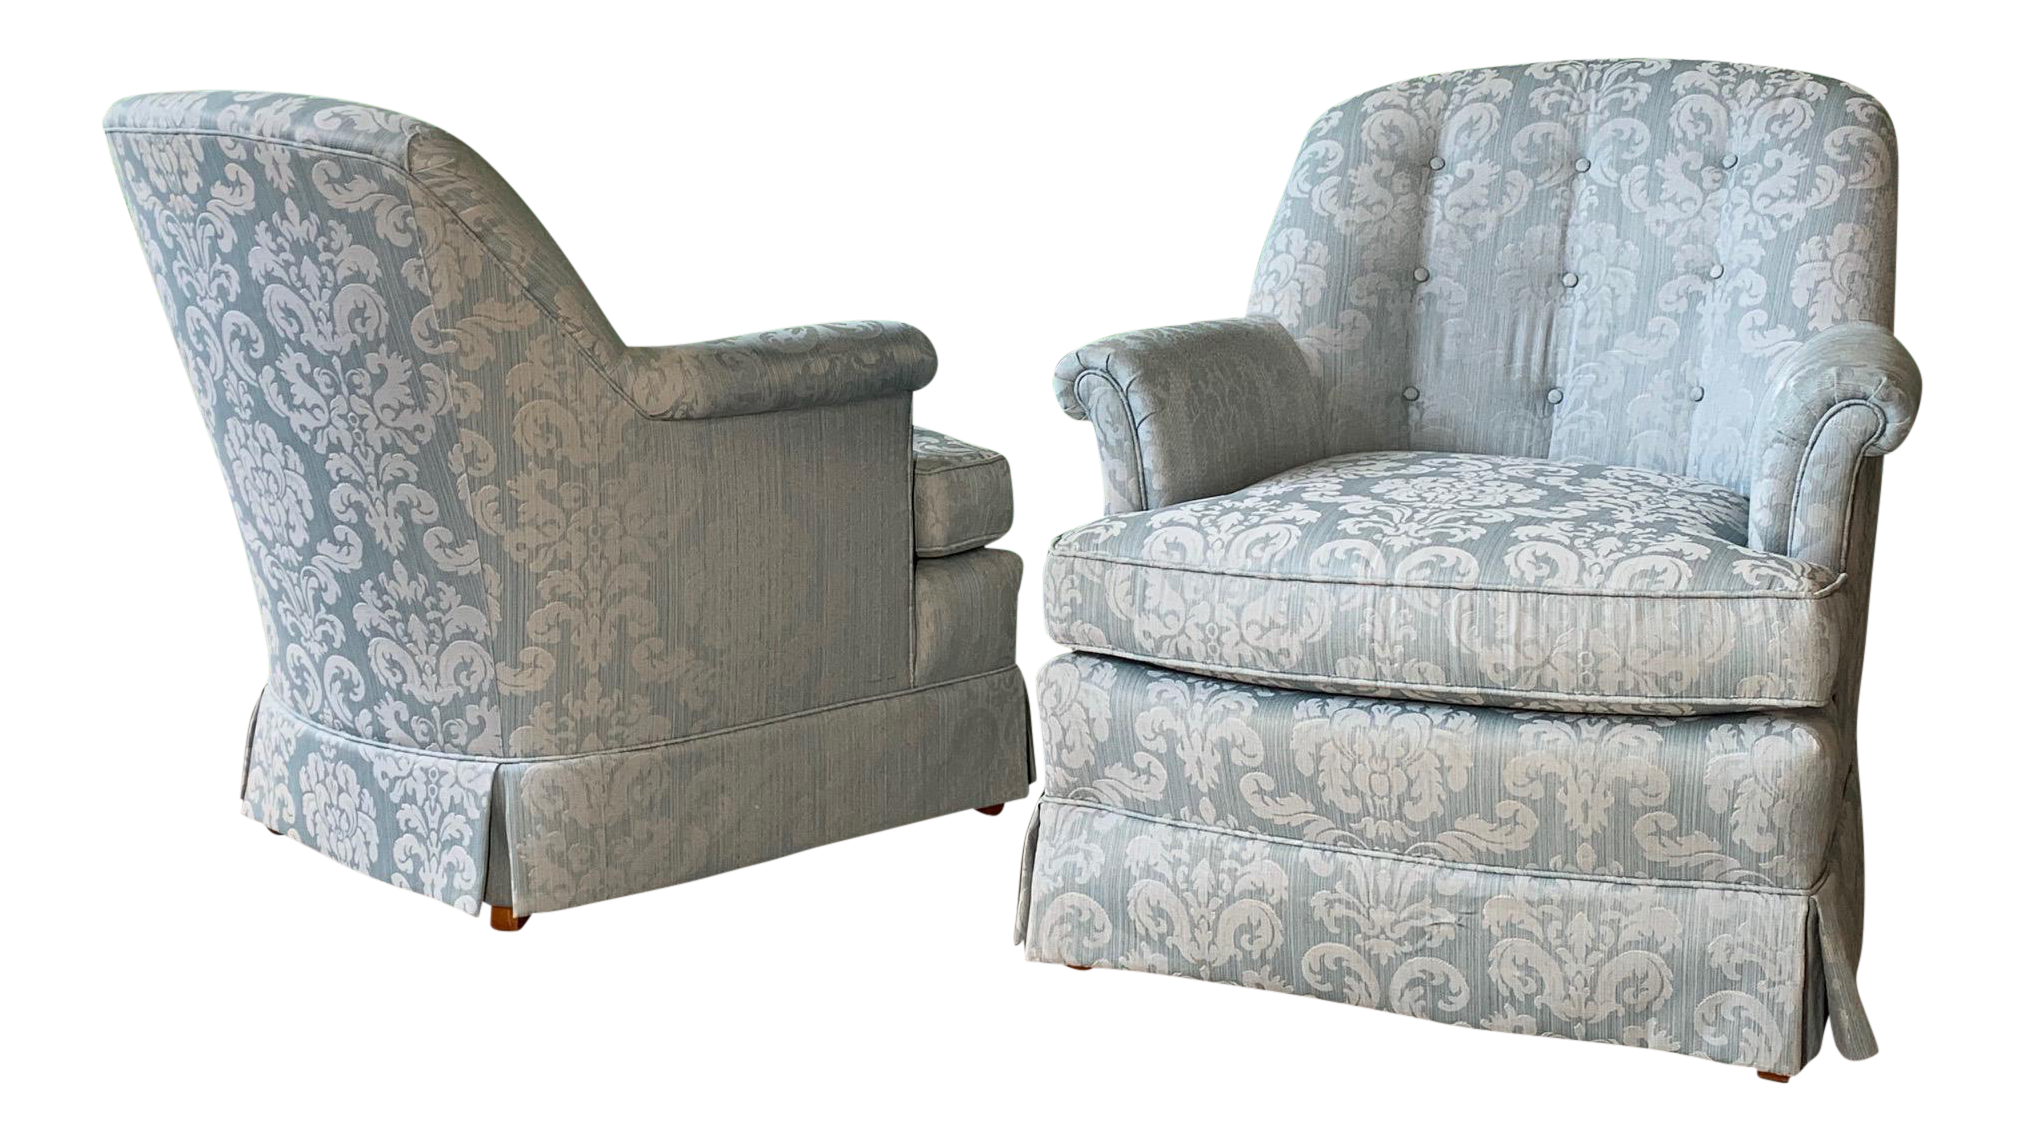 Pair of Swivel Club Chairs by Henredon